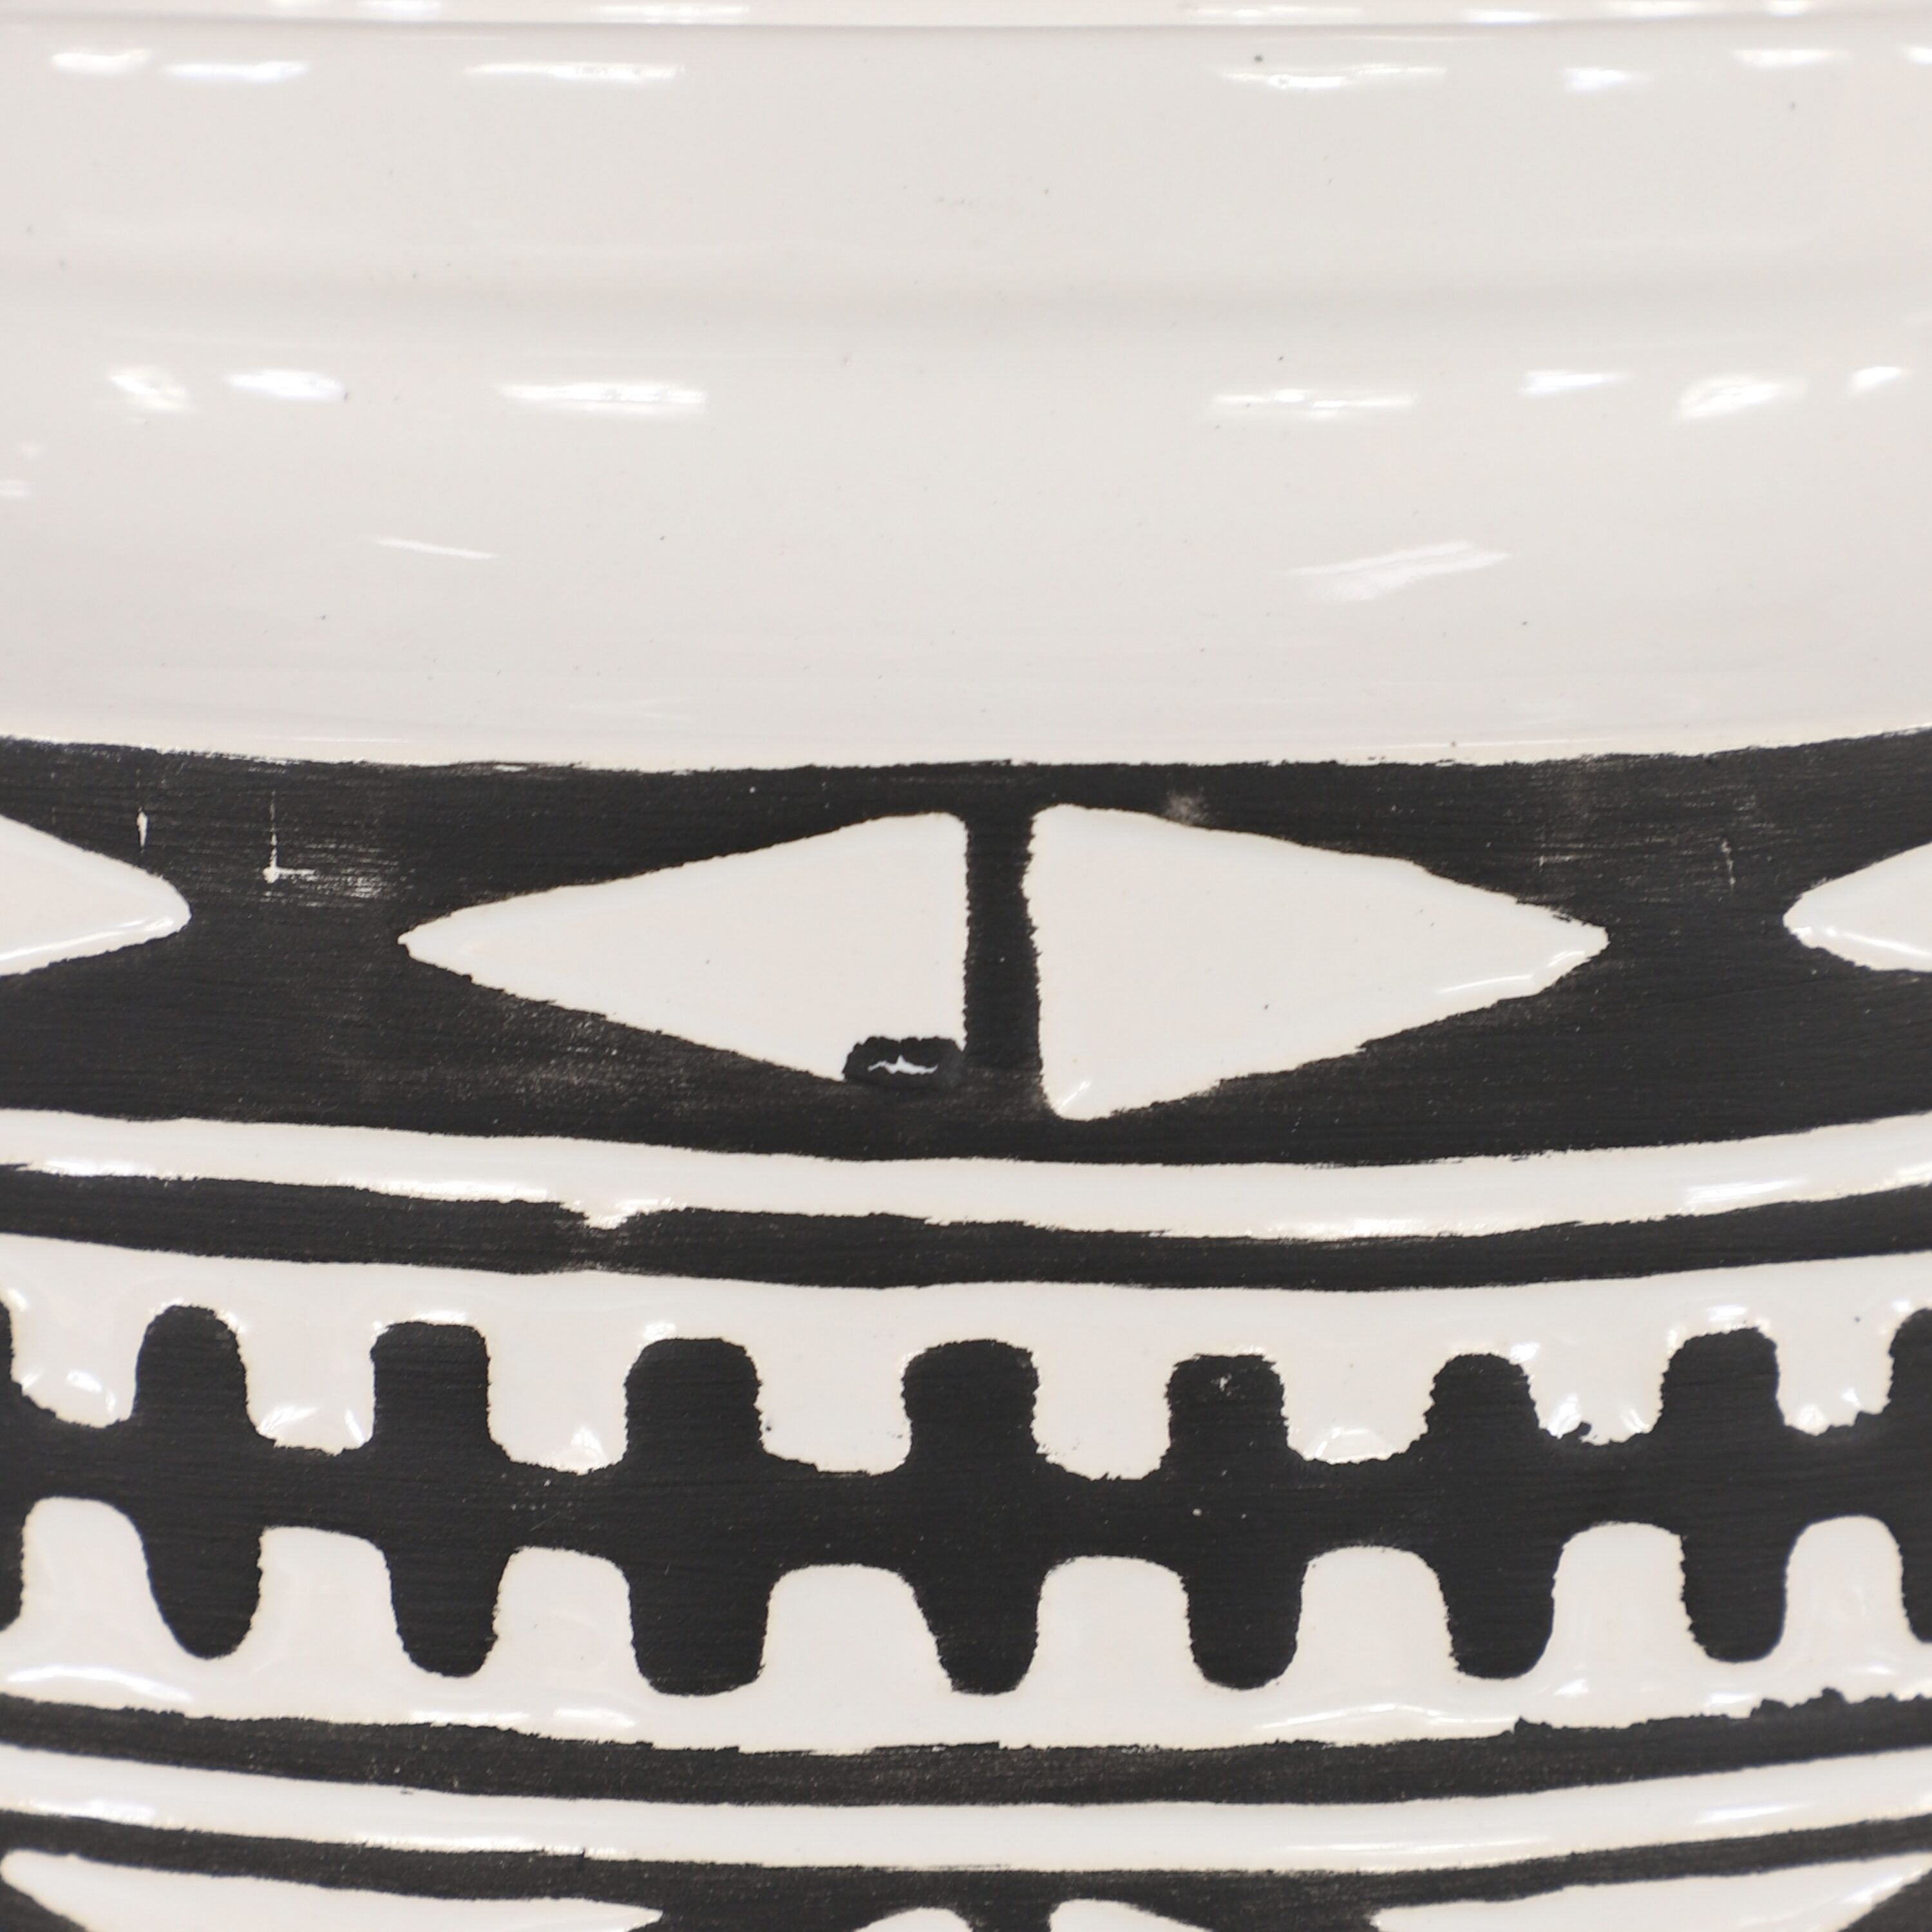 The Novogratz 3-Pack Gray Glass Farmhouse Decorative Jar in the Decorative  Accessories department at